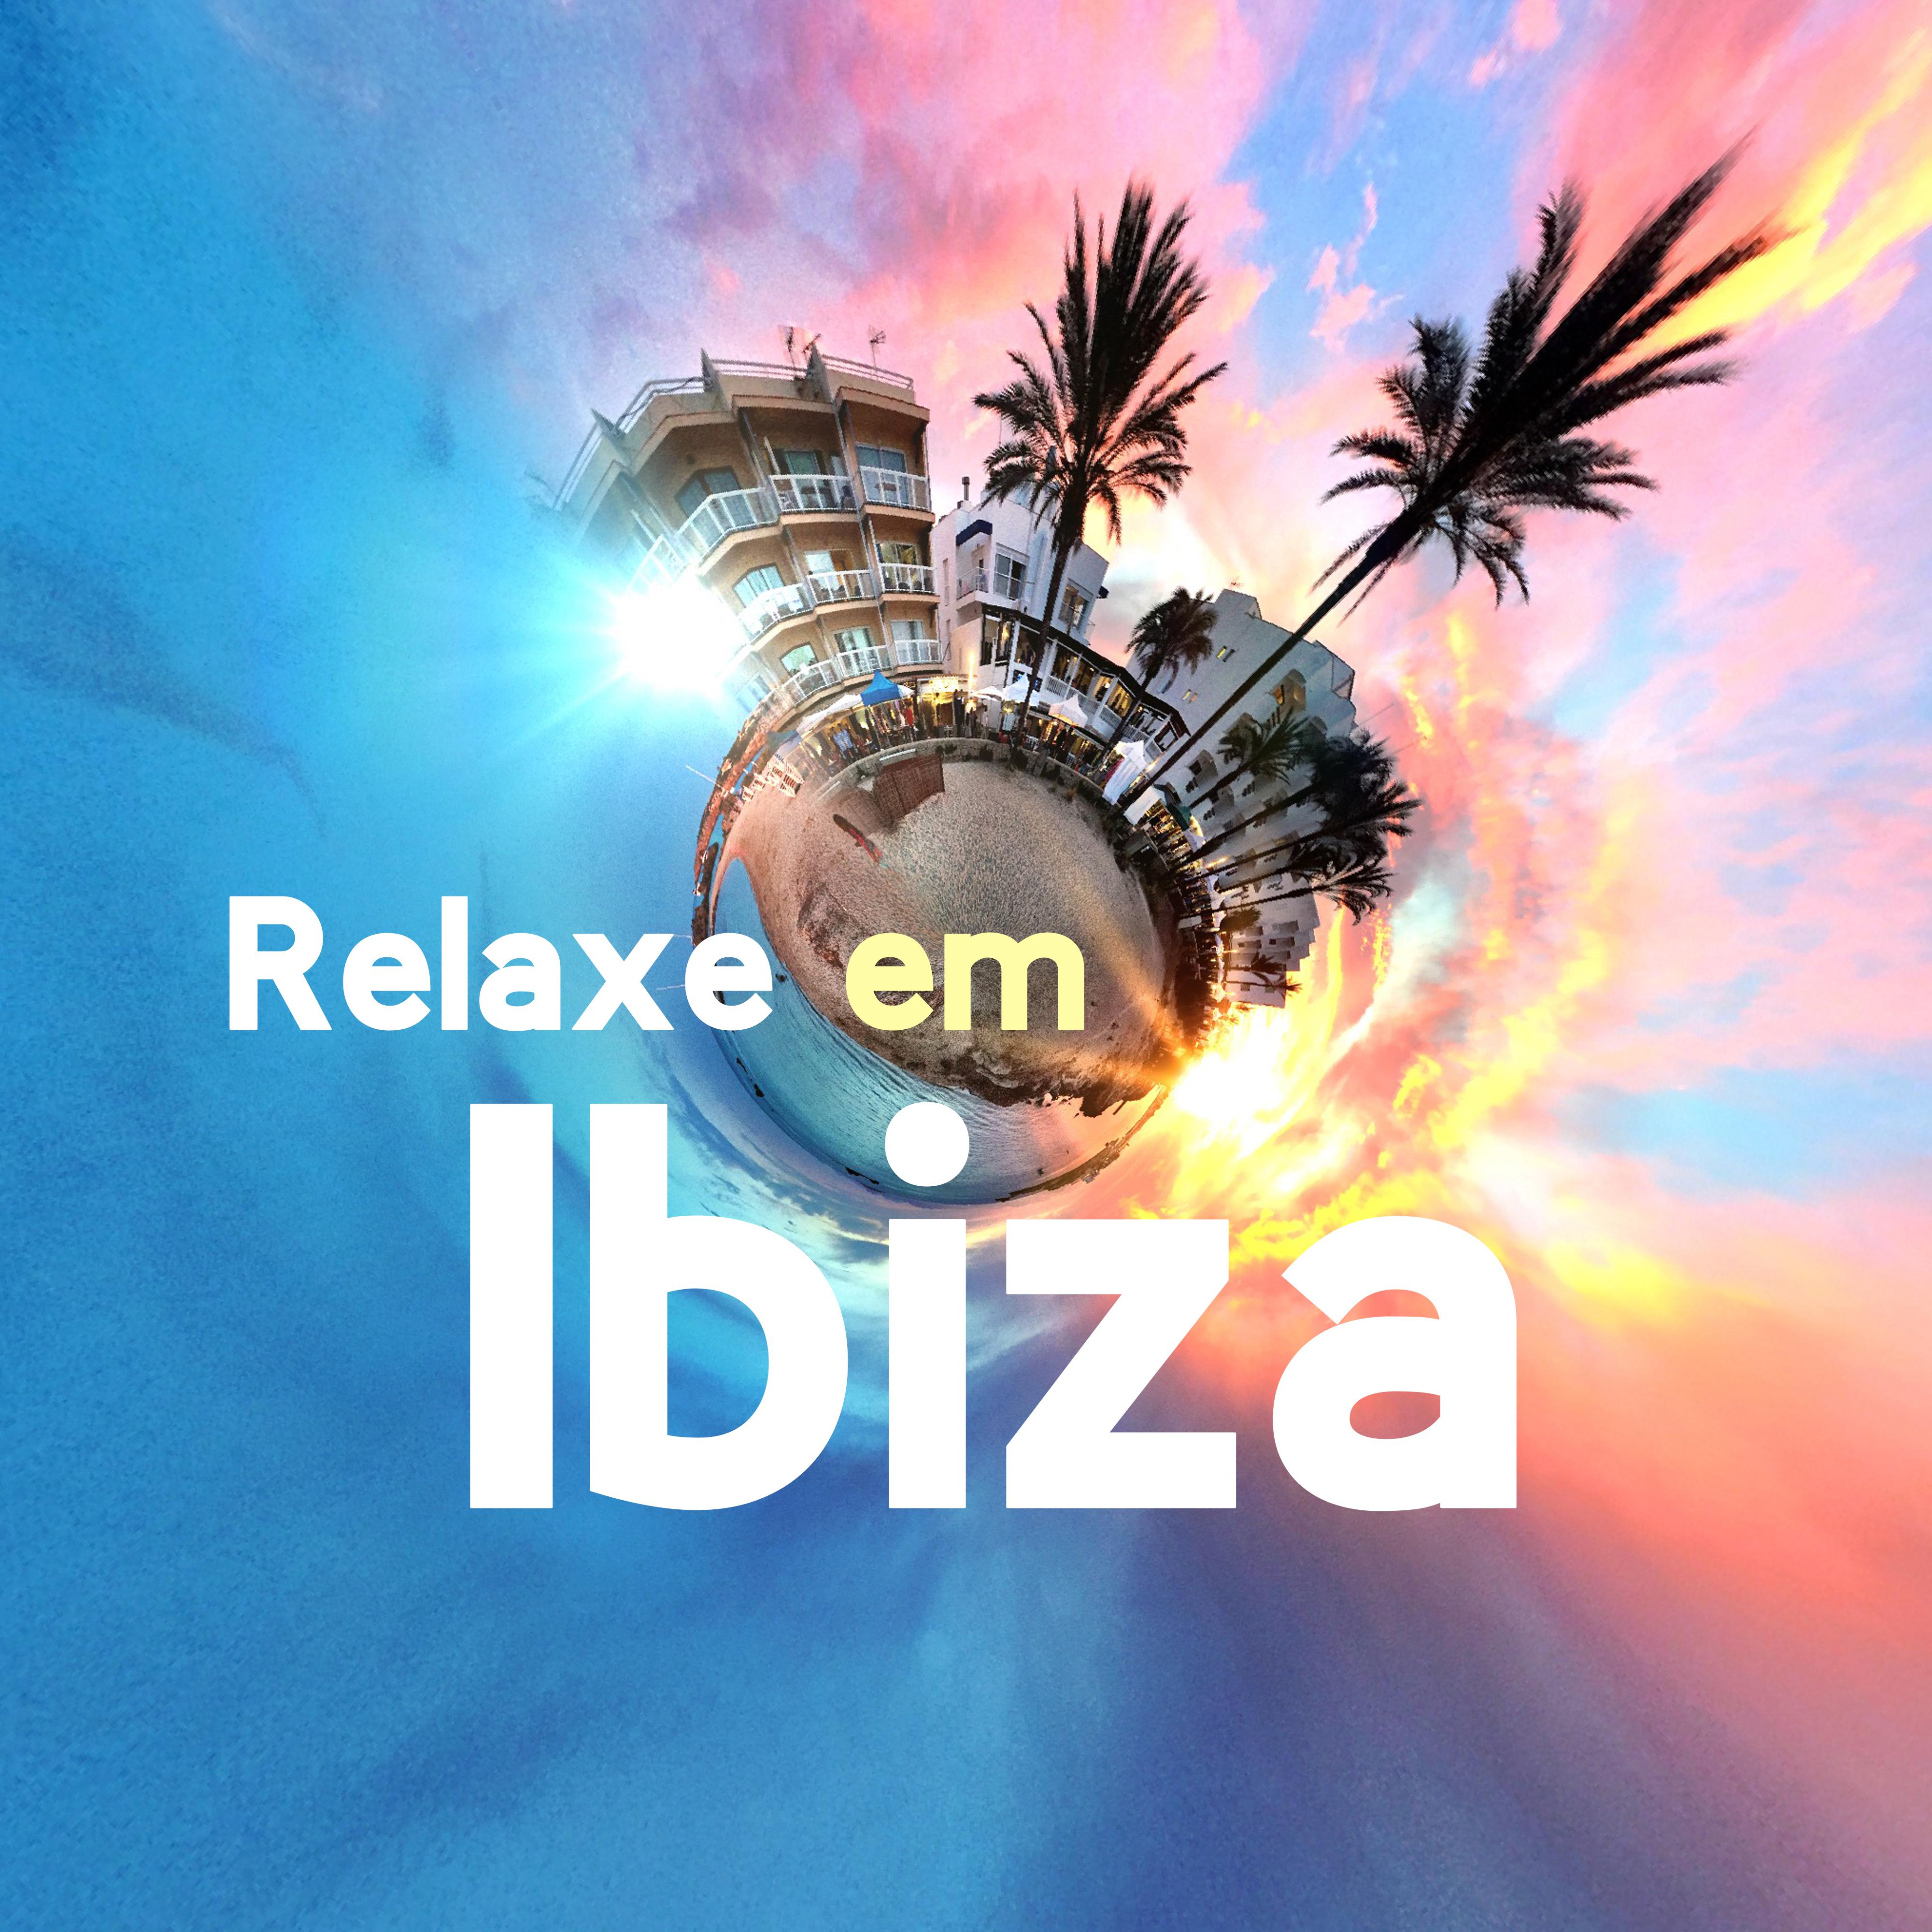 Relaxe em Ibiza - Música Ambiente Tranquila Para Relaxamento Total, Momentos de Descanso e Relaxamento